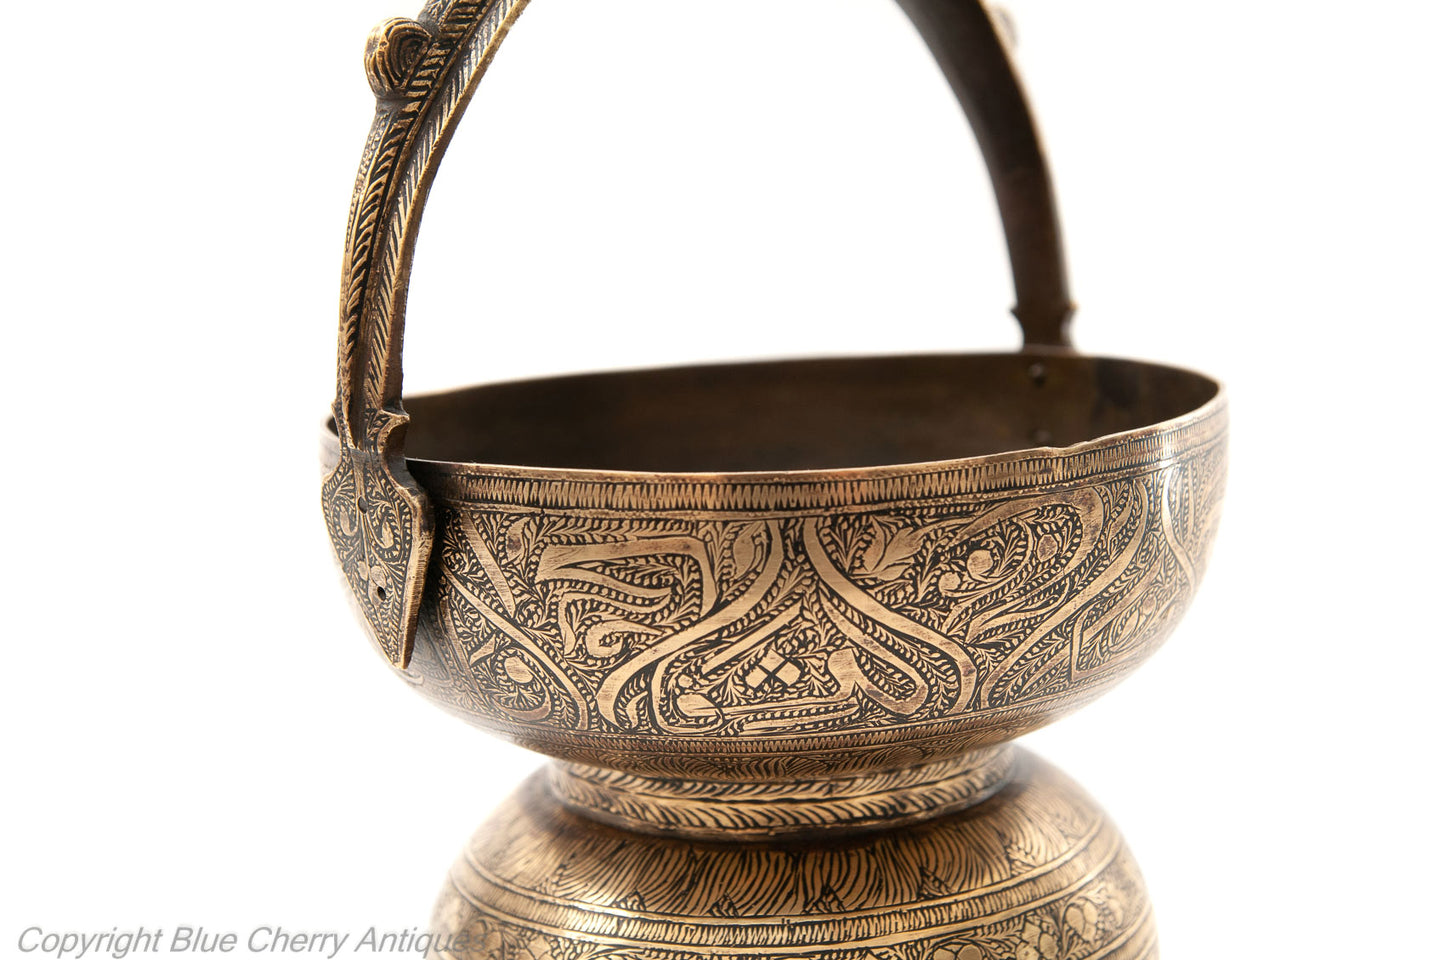 Antique Deccani Indian Islamic Benares Brass Chased Naskh Script Alms Bowl (Code 1823)